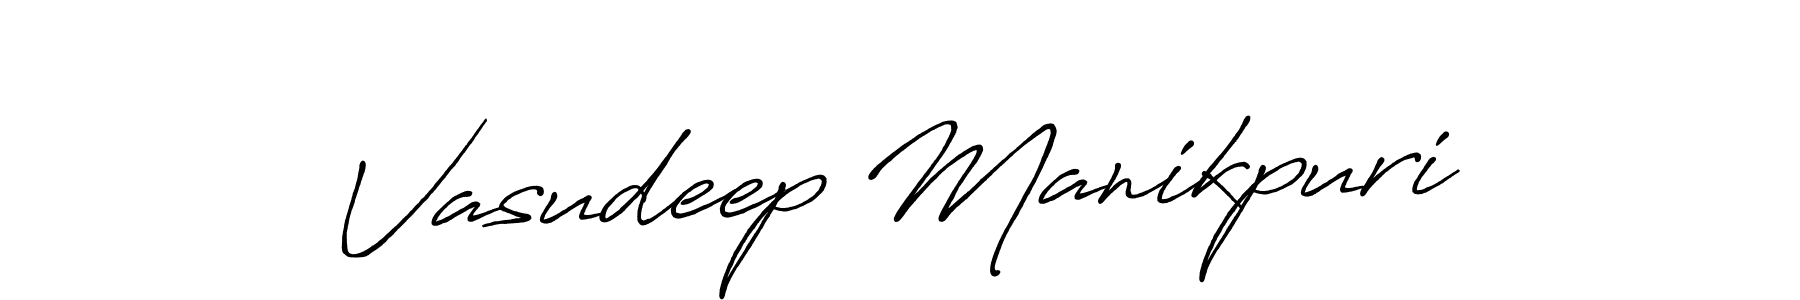 How to Draw Vasudeep Manikpuri signature style? Antro_Vectra_Bolder is a latest design signature styles for name Vasudeep Manikpuri. Vasudeep Manikpuri signature style 7 images and pictures png